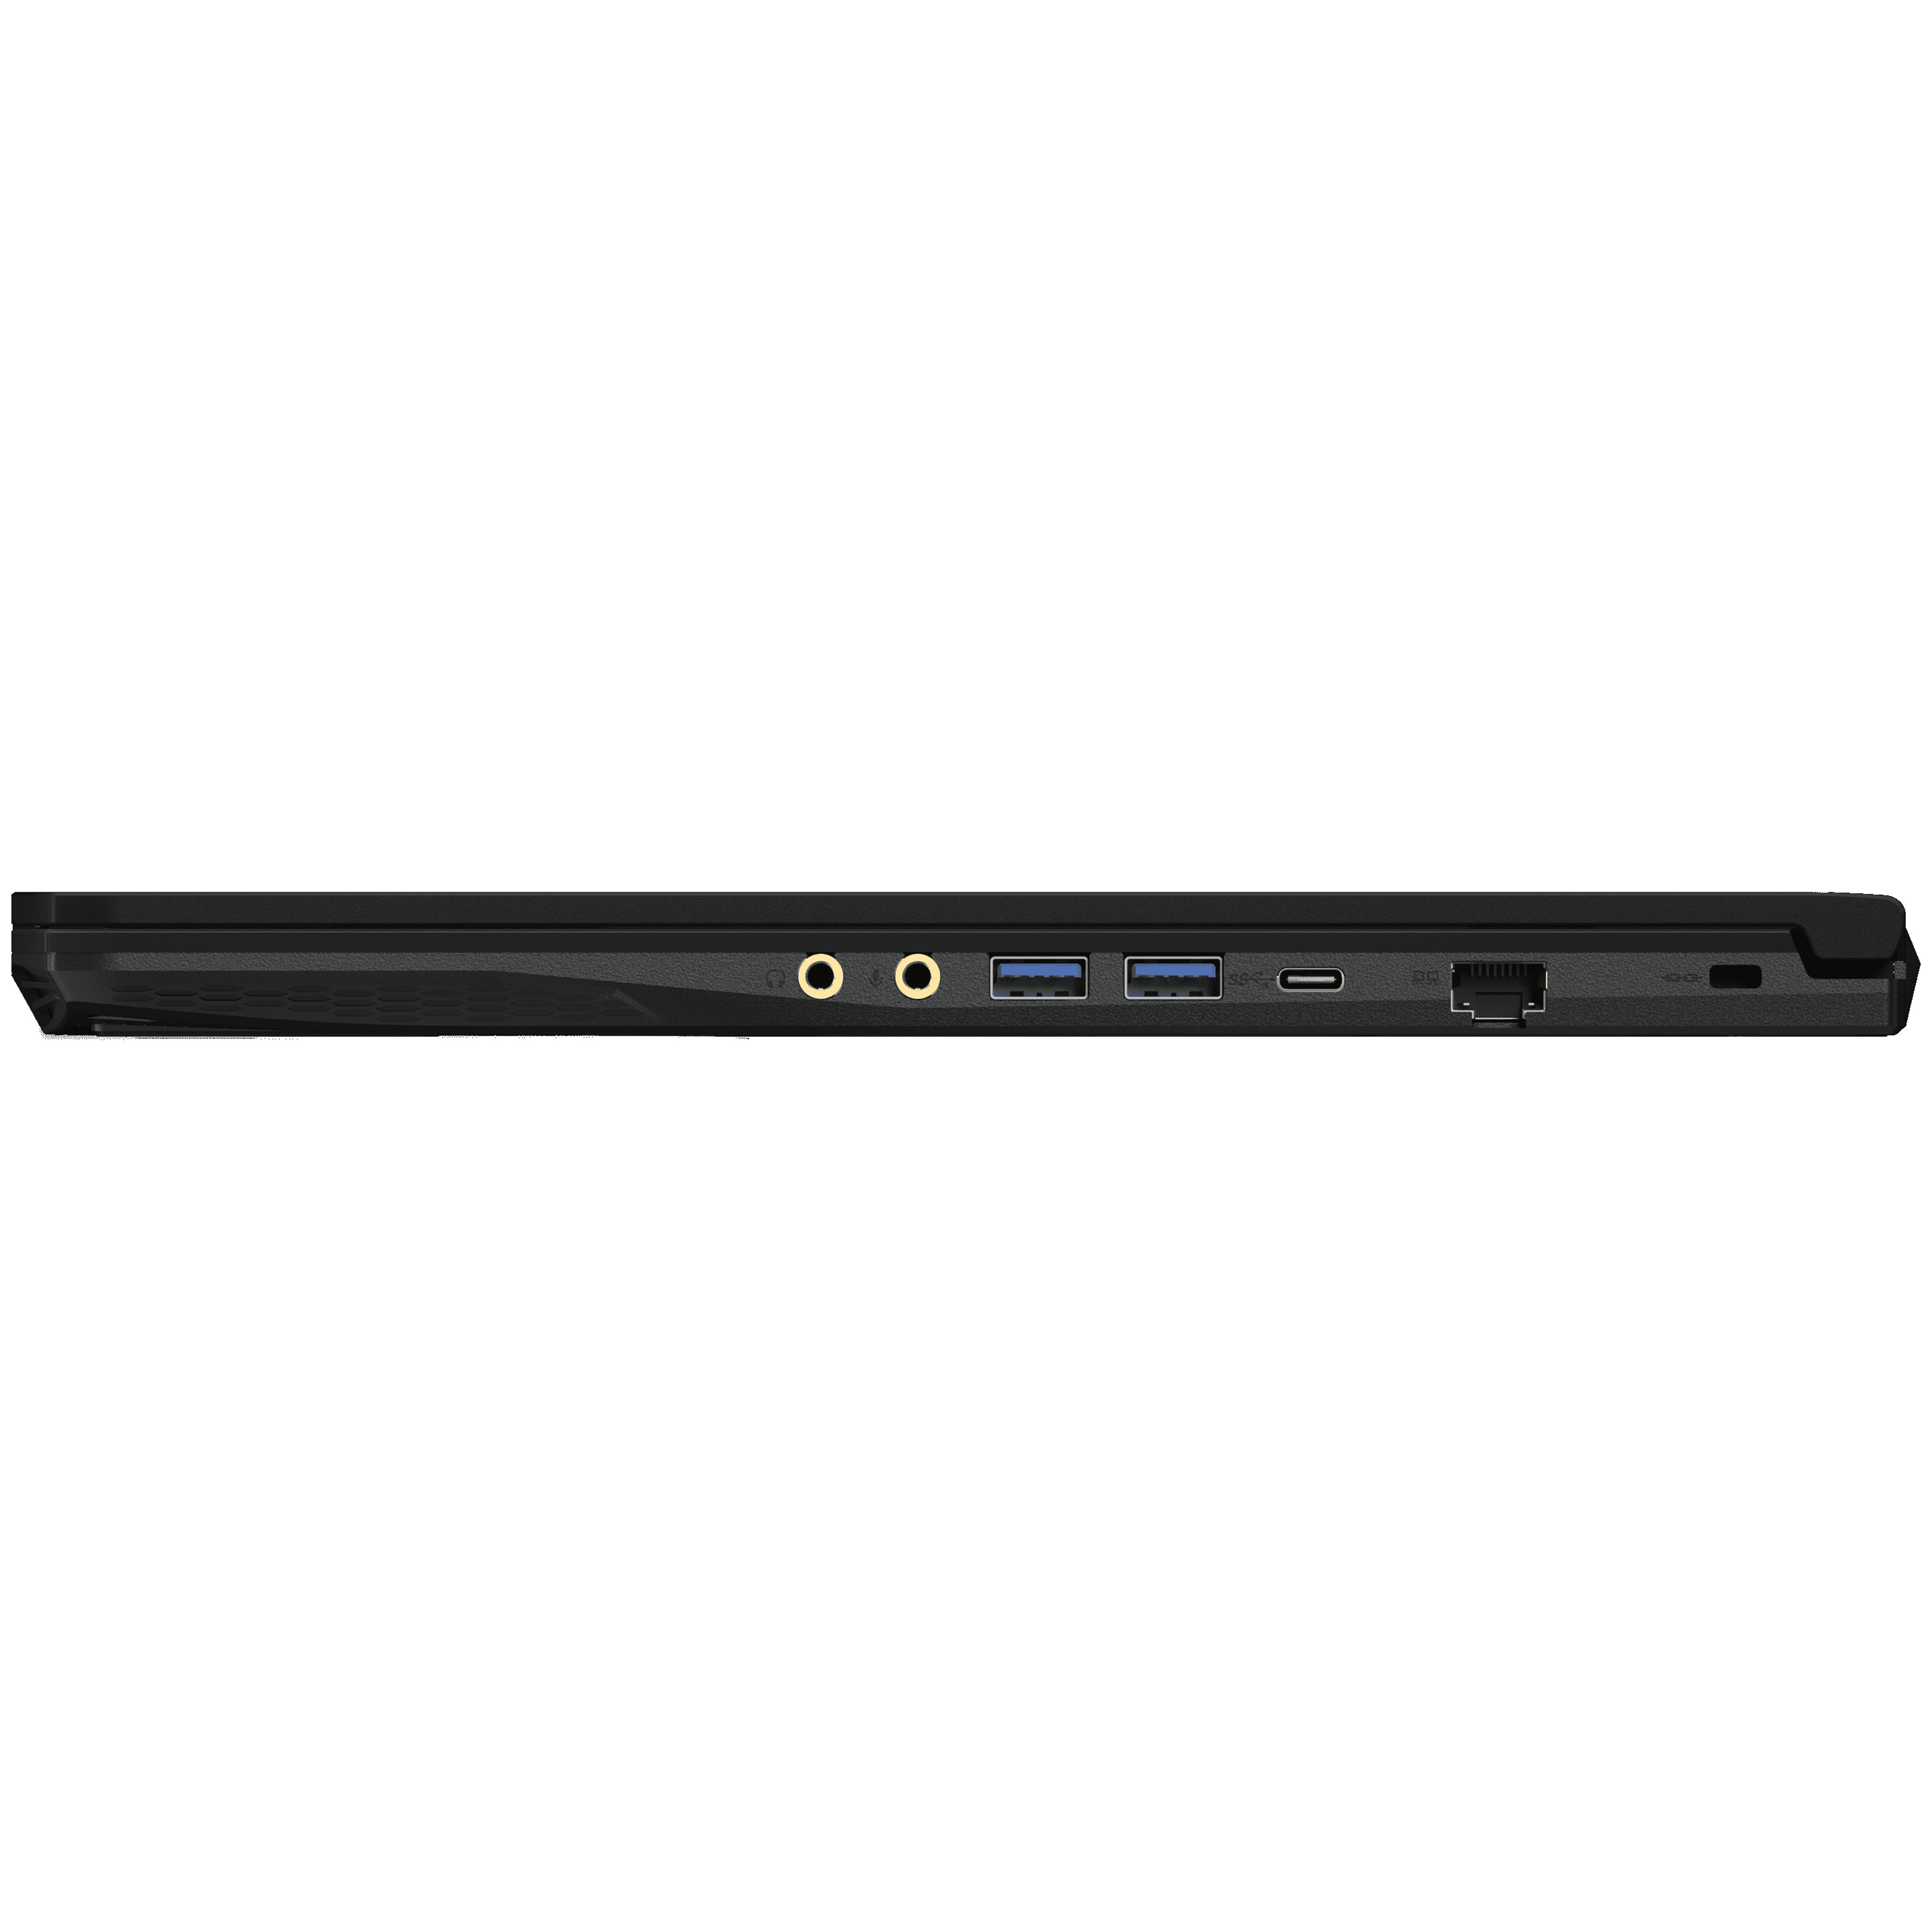 MSI GF63 Thin Gaming Laptop, 15.6" FHD Display, Intel Core i5-10300H, NVIDIA GeForce GTX 1650 MaxQ, 8GB DDR4, 256GB NVMe SSD, Black, Windows 10 - GF63222 - image 3 of 5